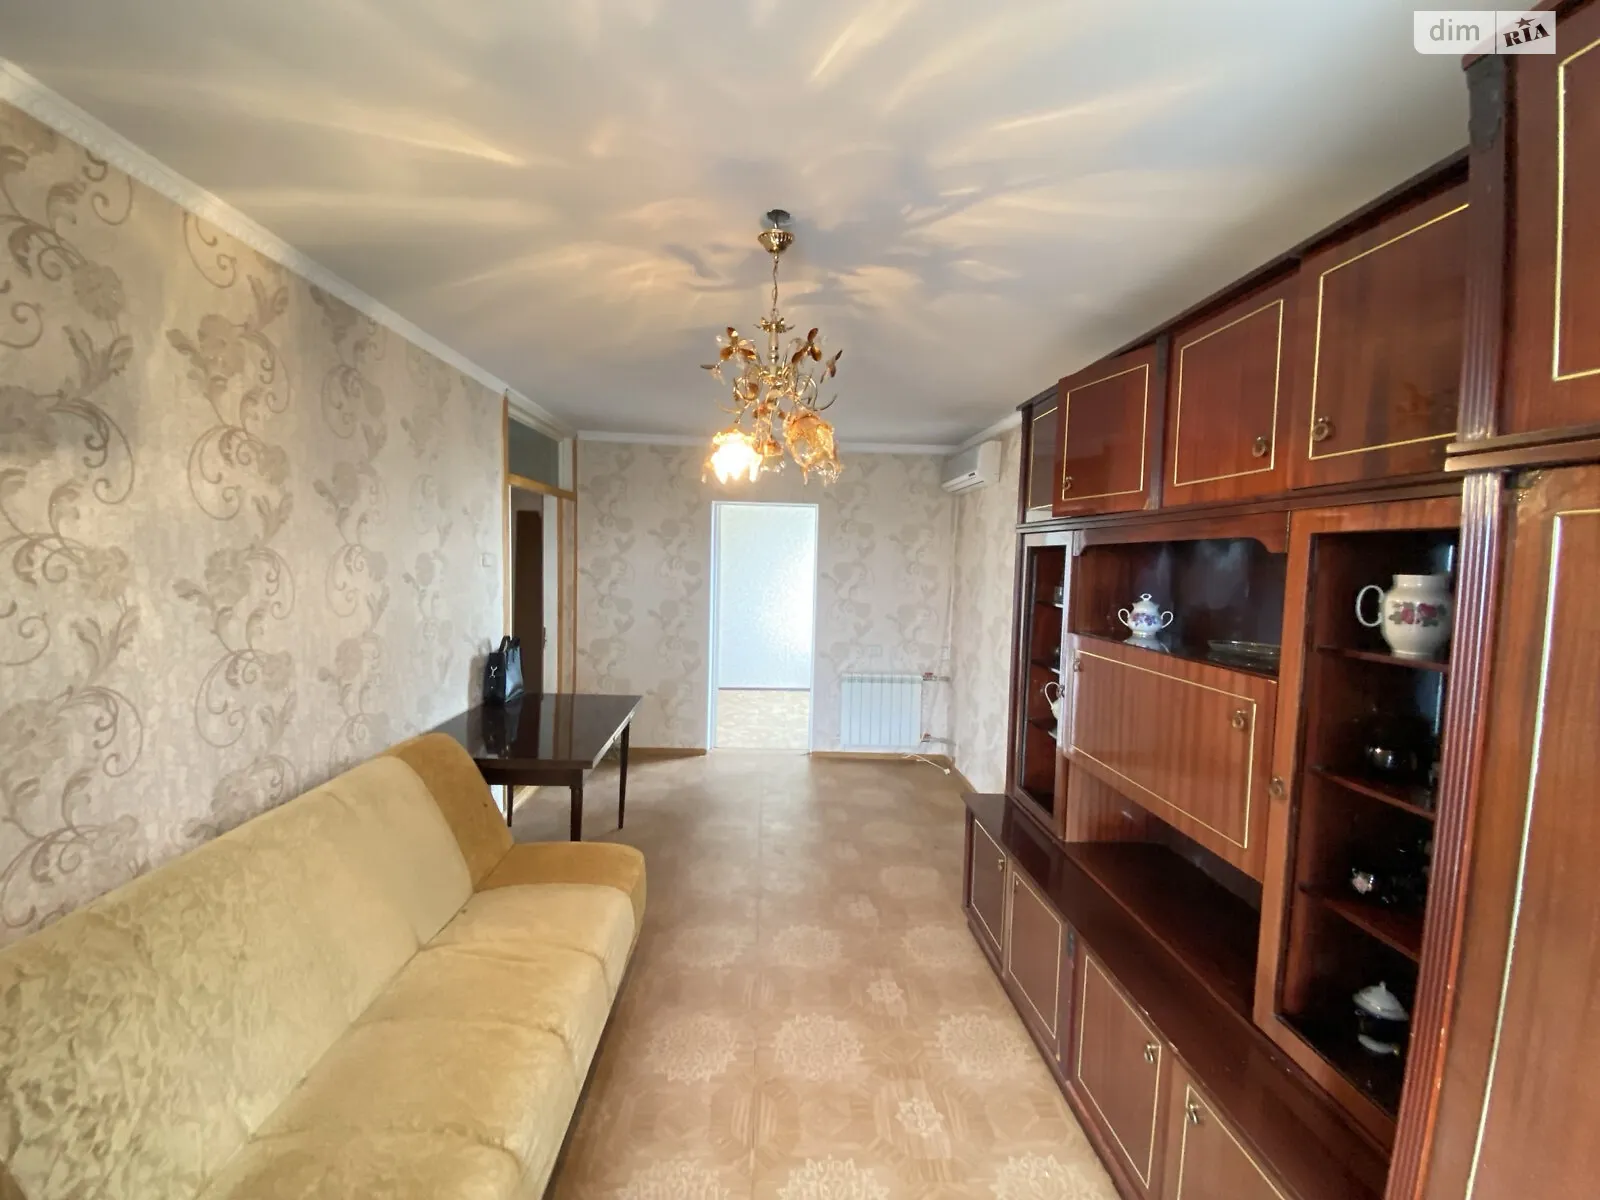 Сдается в аренду 3-комнатная квартира 57 кв. м в Николаеве - фото 3